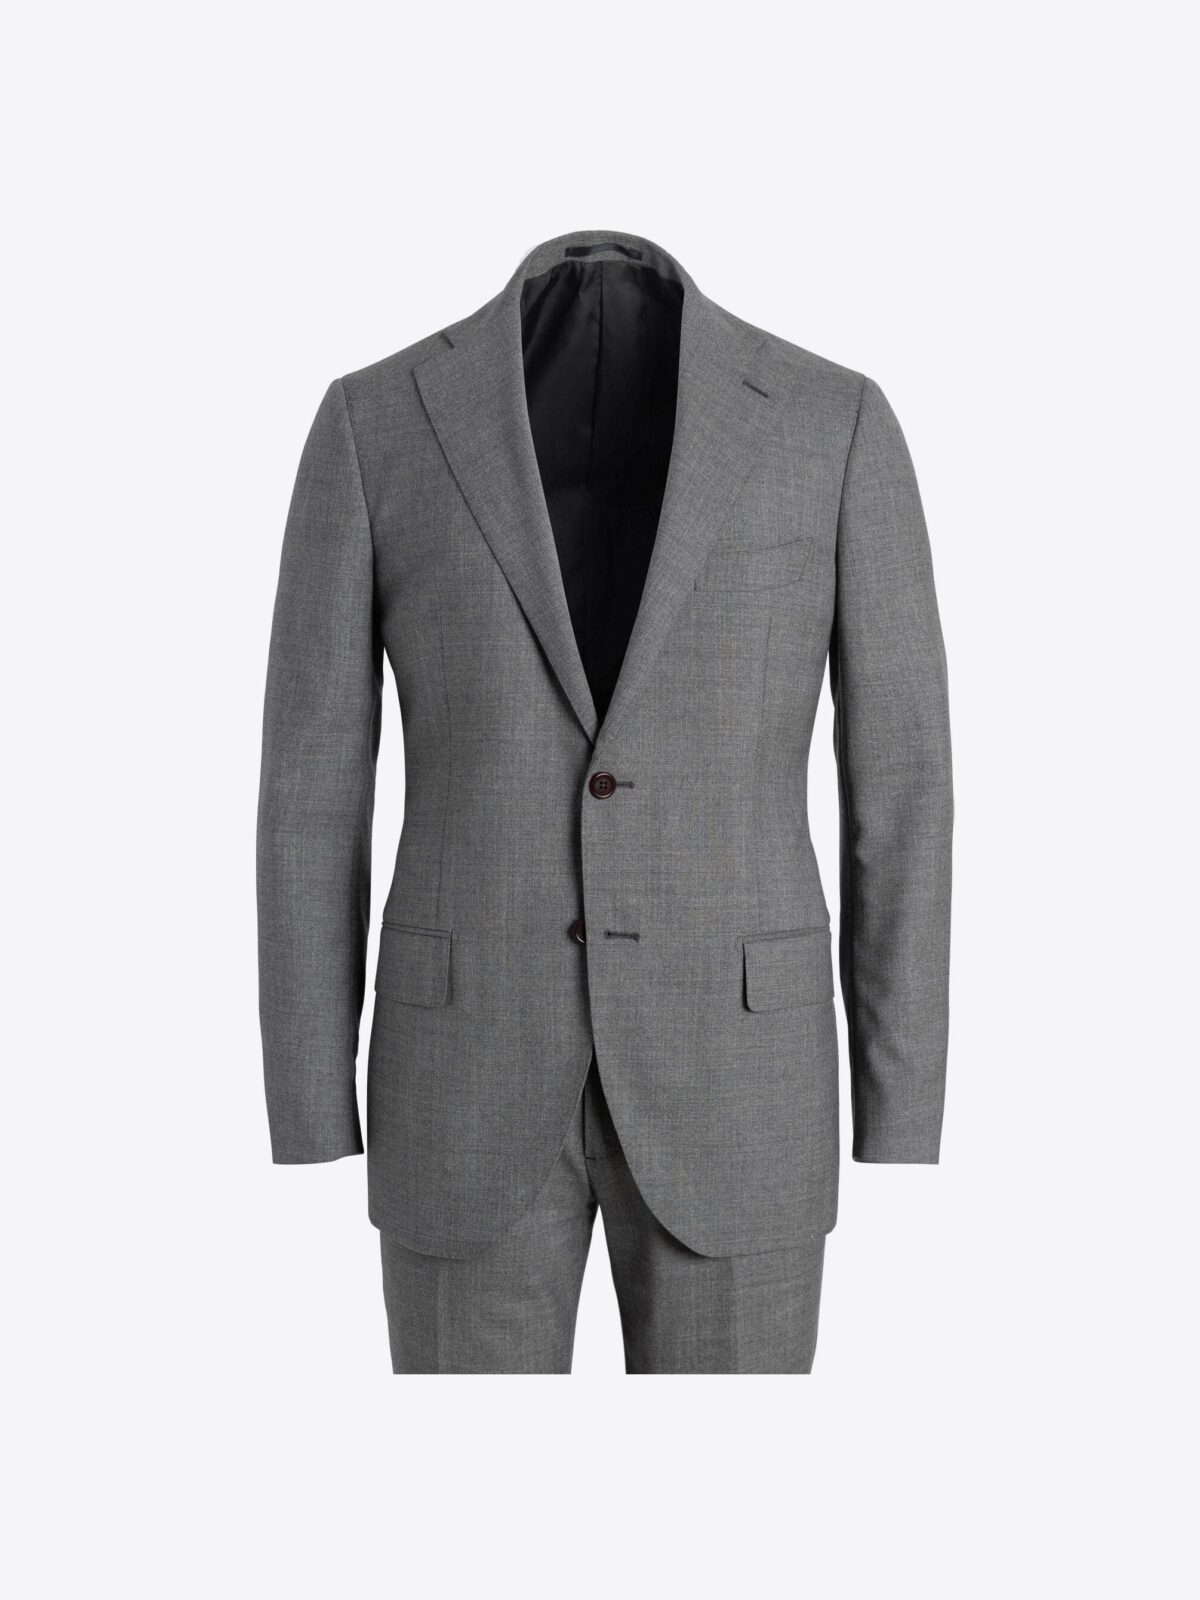 Allen Grey Tropical Fresco Wool Suit Jacket - Custom Fit Tailored